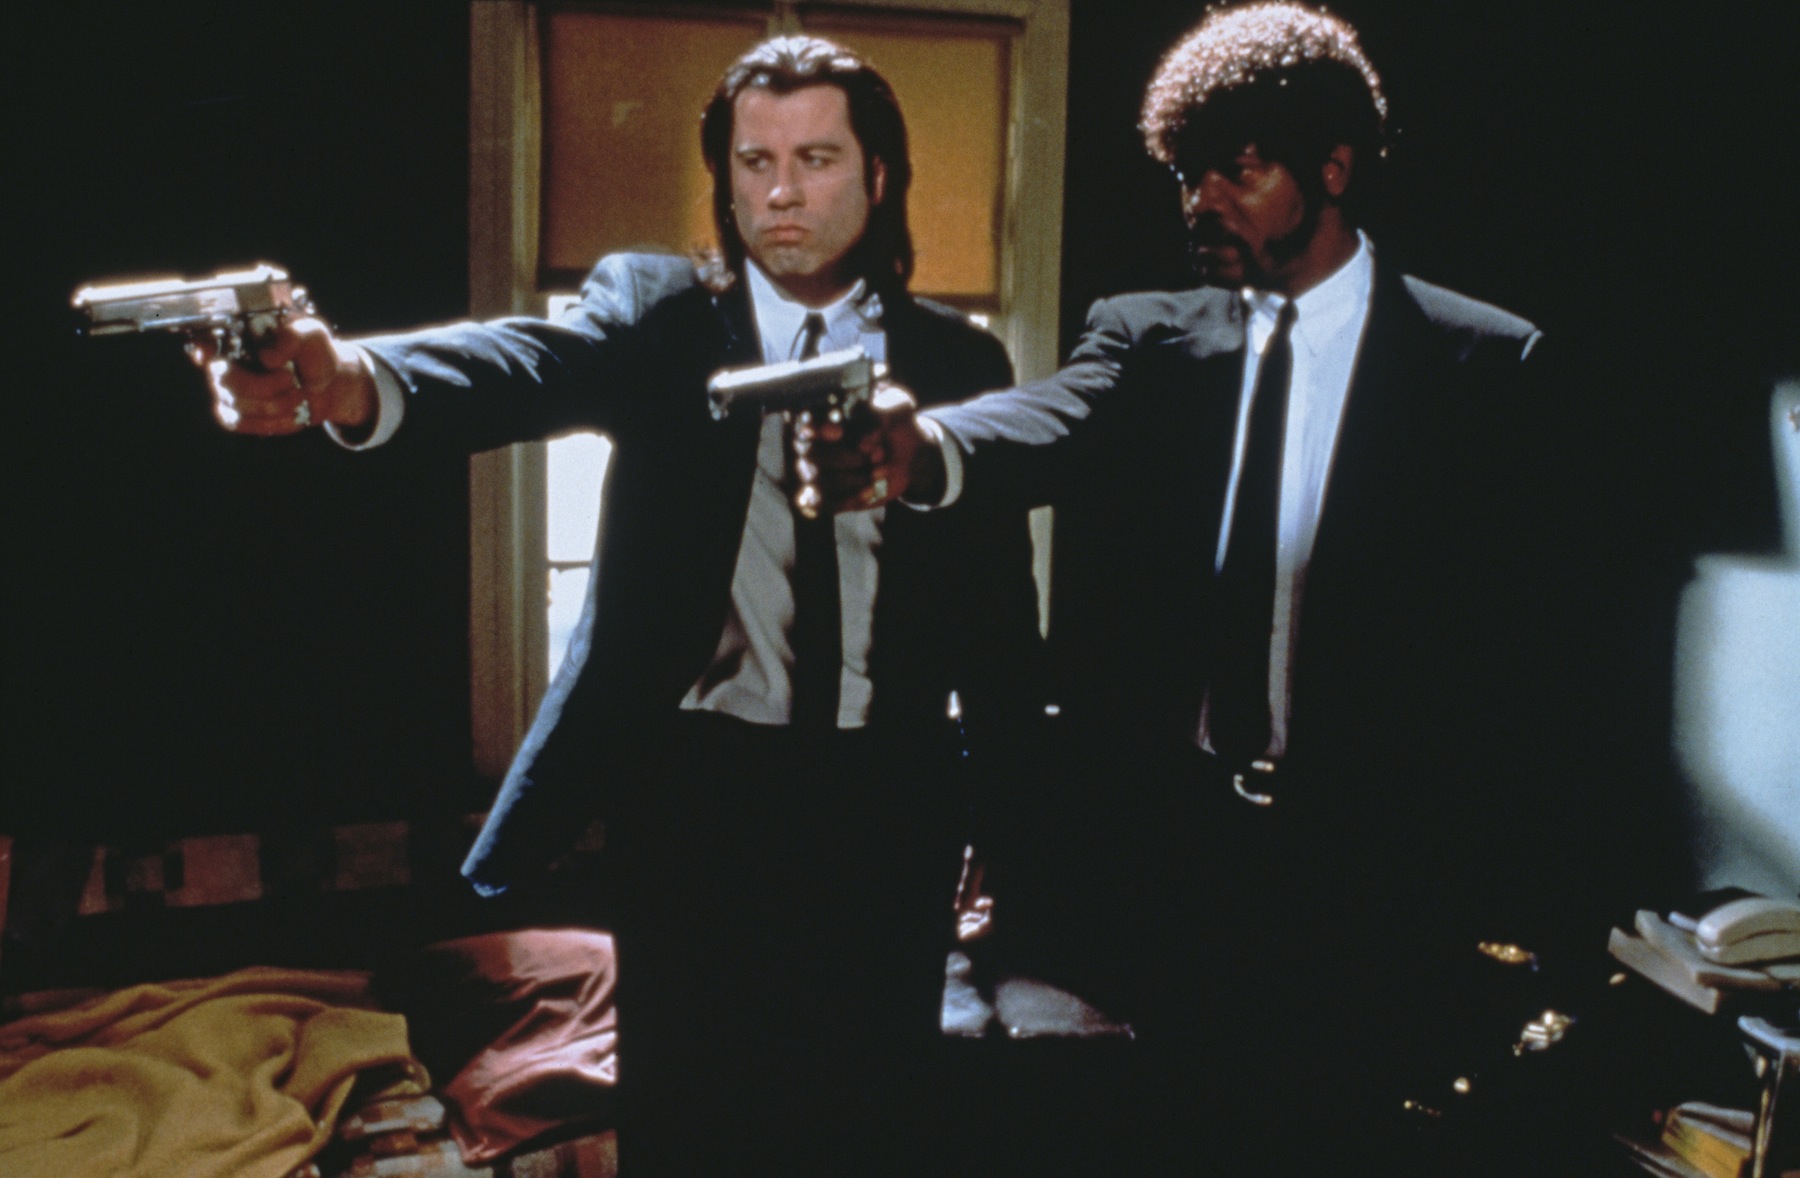 Vincent Vega (John Travolta) and Jules Winnfield (Samuel L. Jackson) point their guns at someone in Pulp Fiction